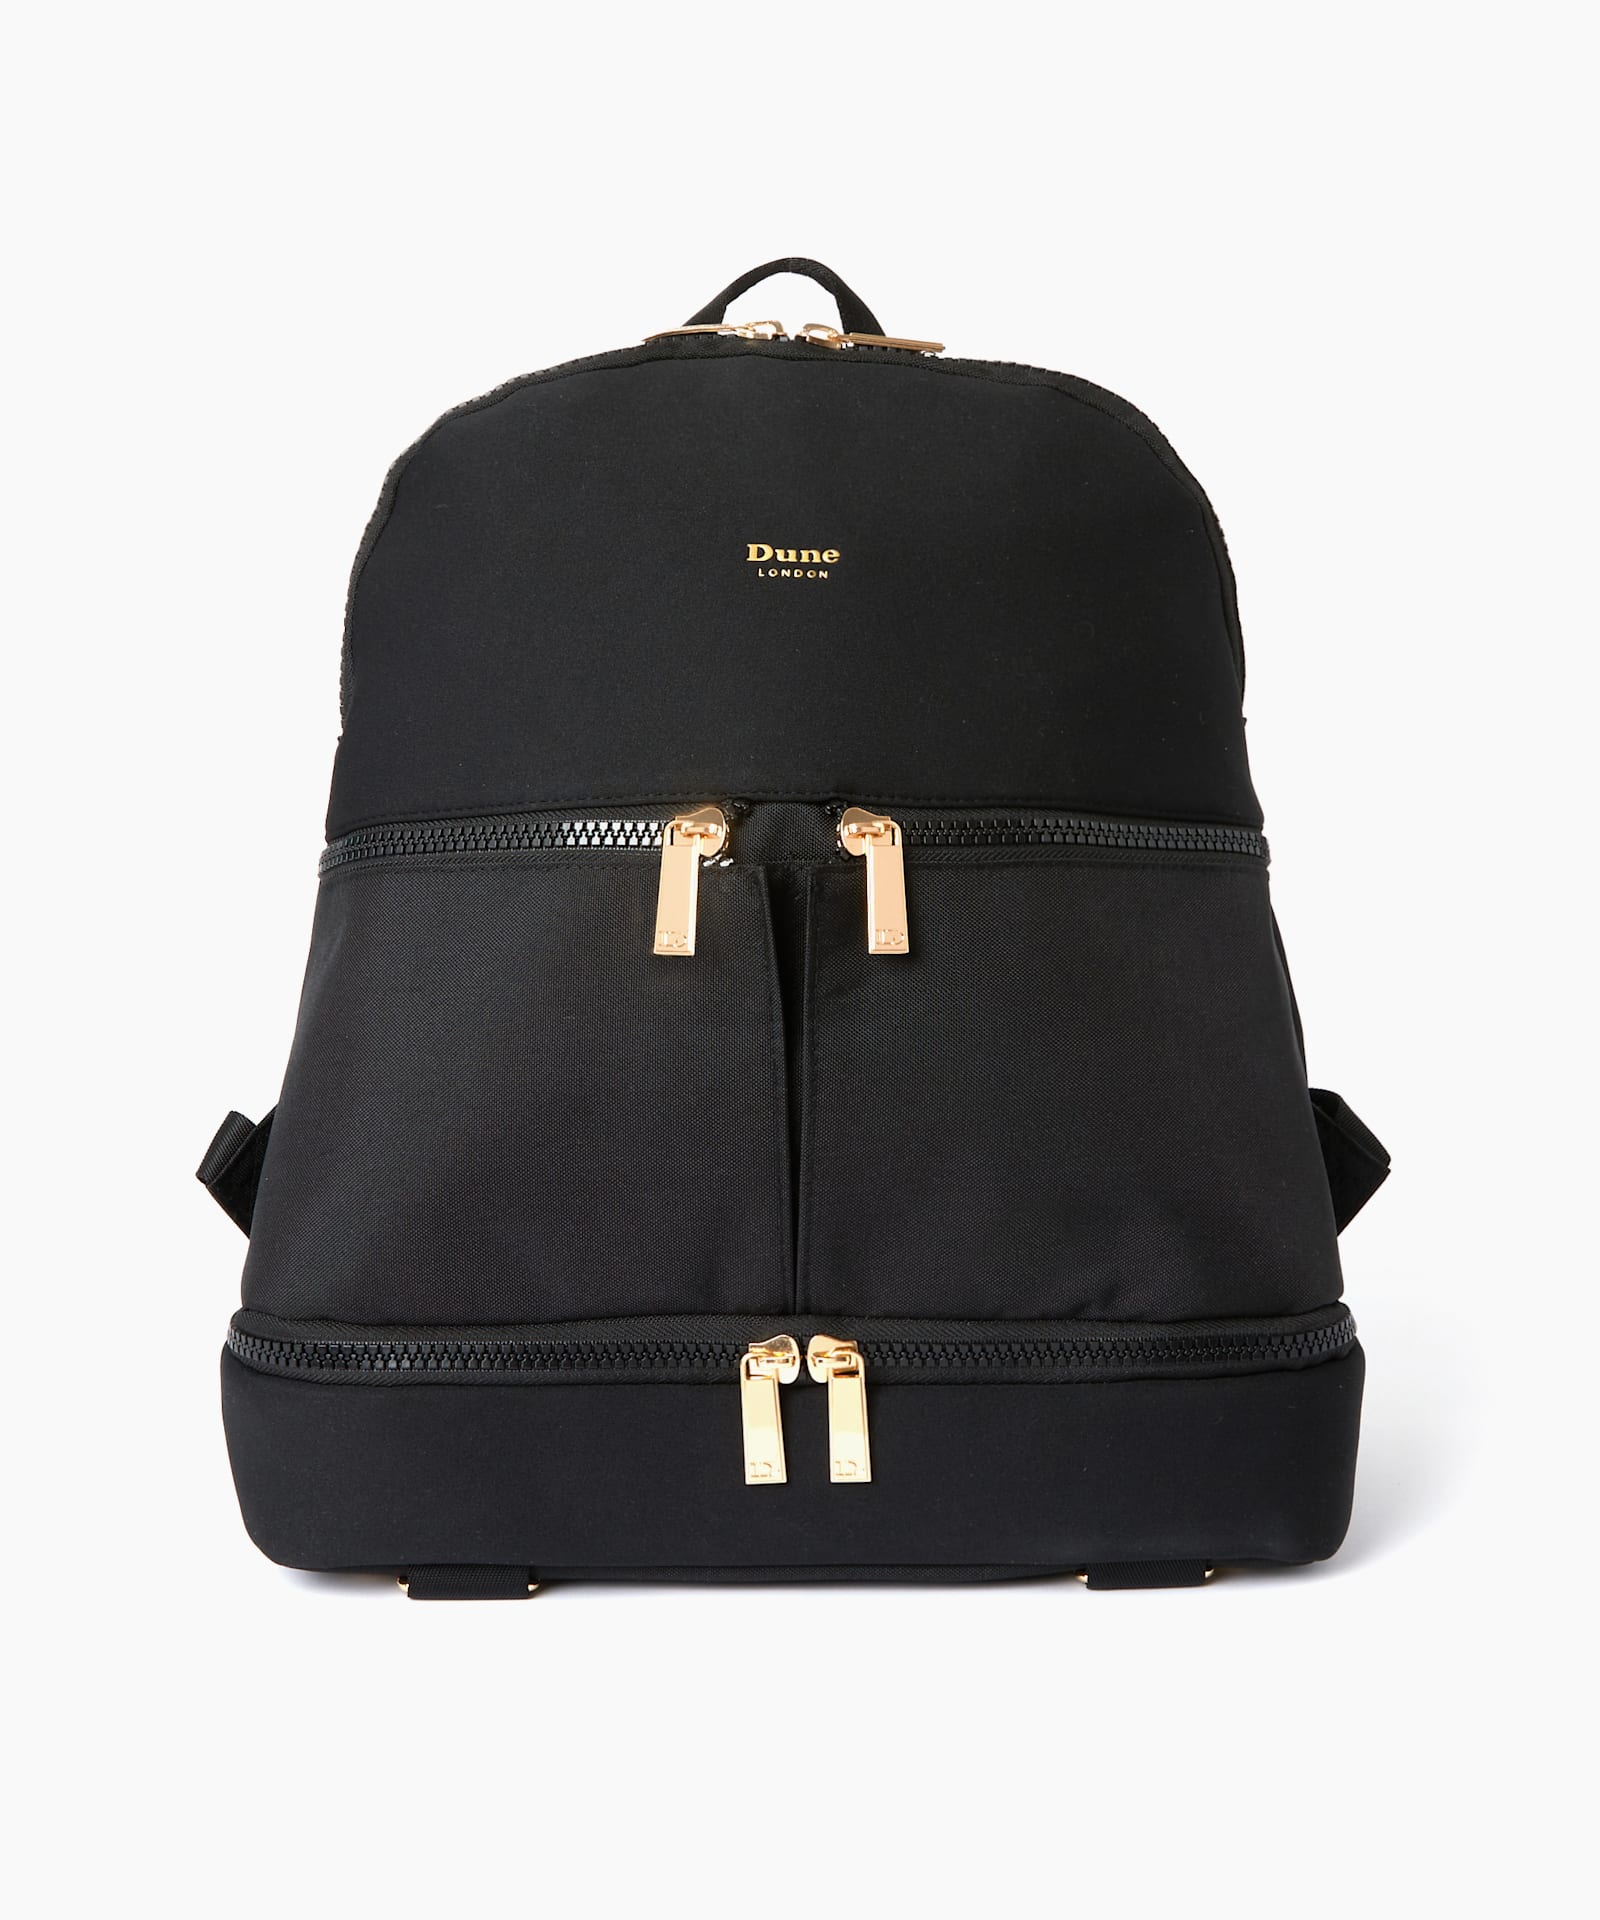 Oracle Backpack, Black, large